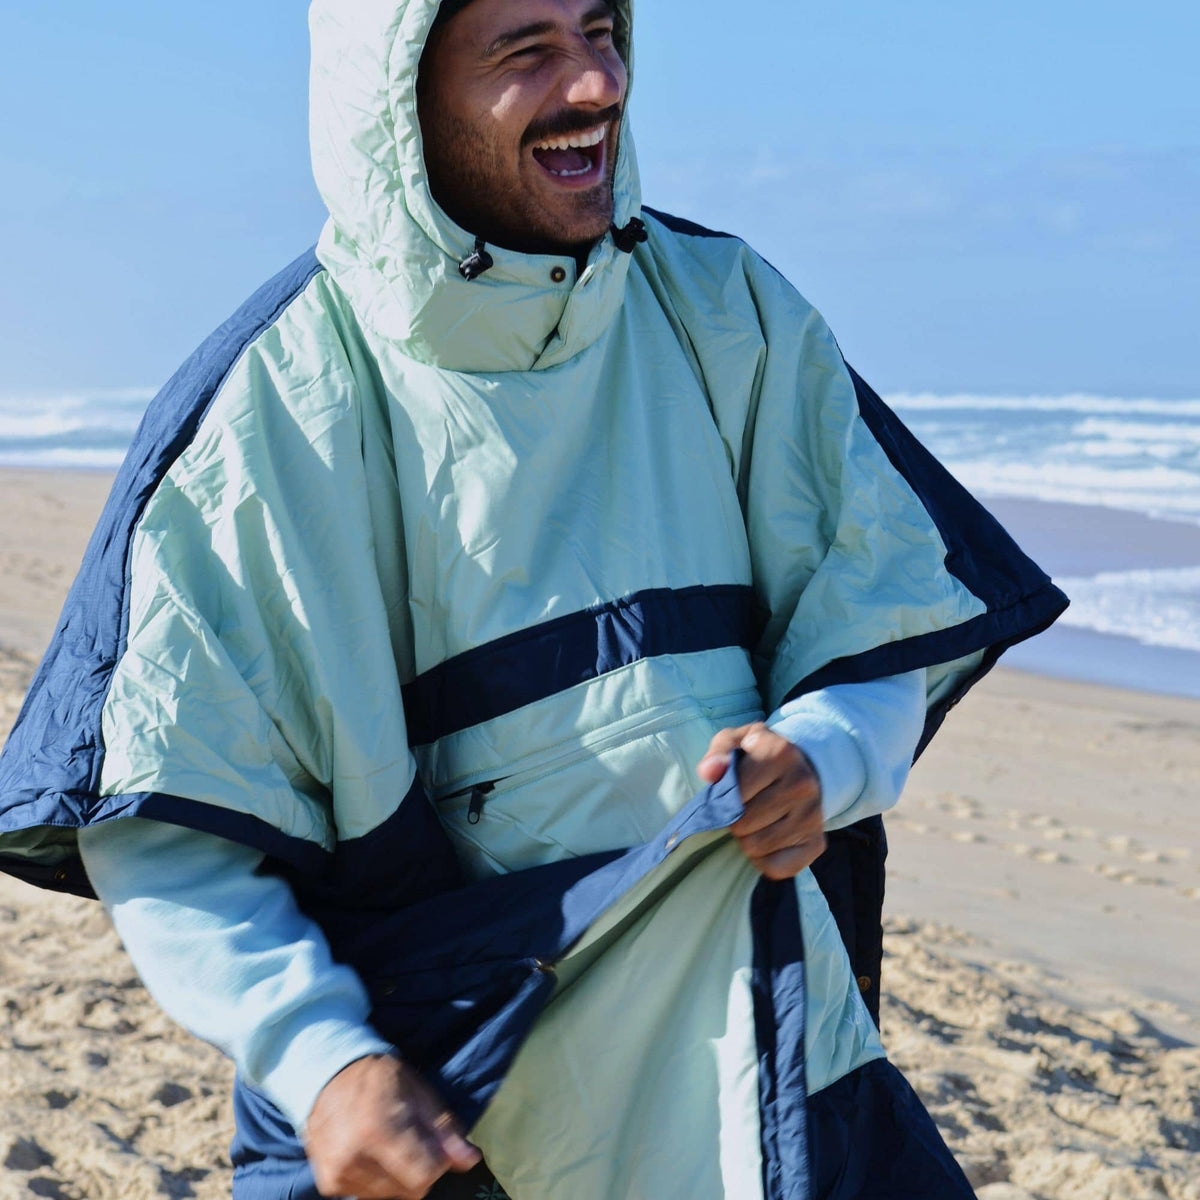 VOITED Trooper Outdoor Premium Poncho-Blanket - Ocean Navy/Cameo Green